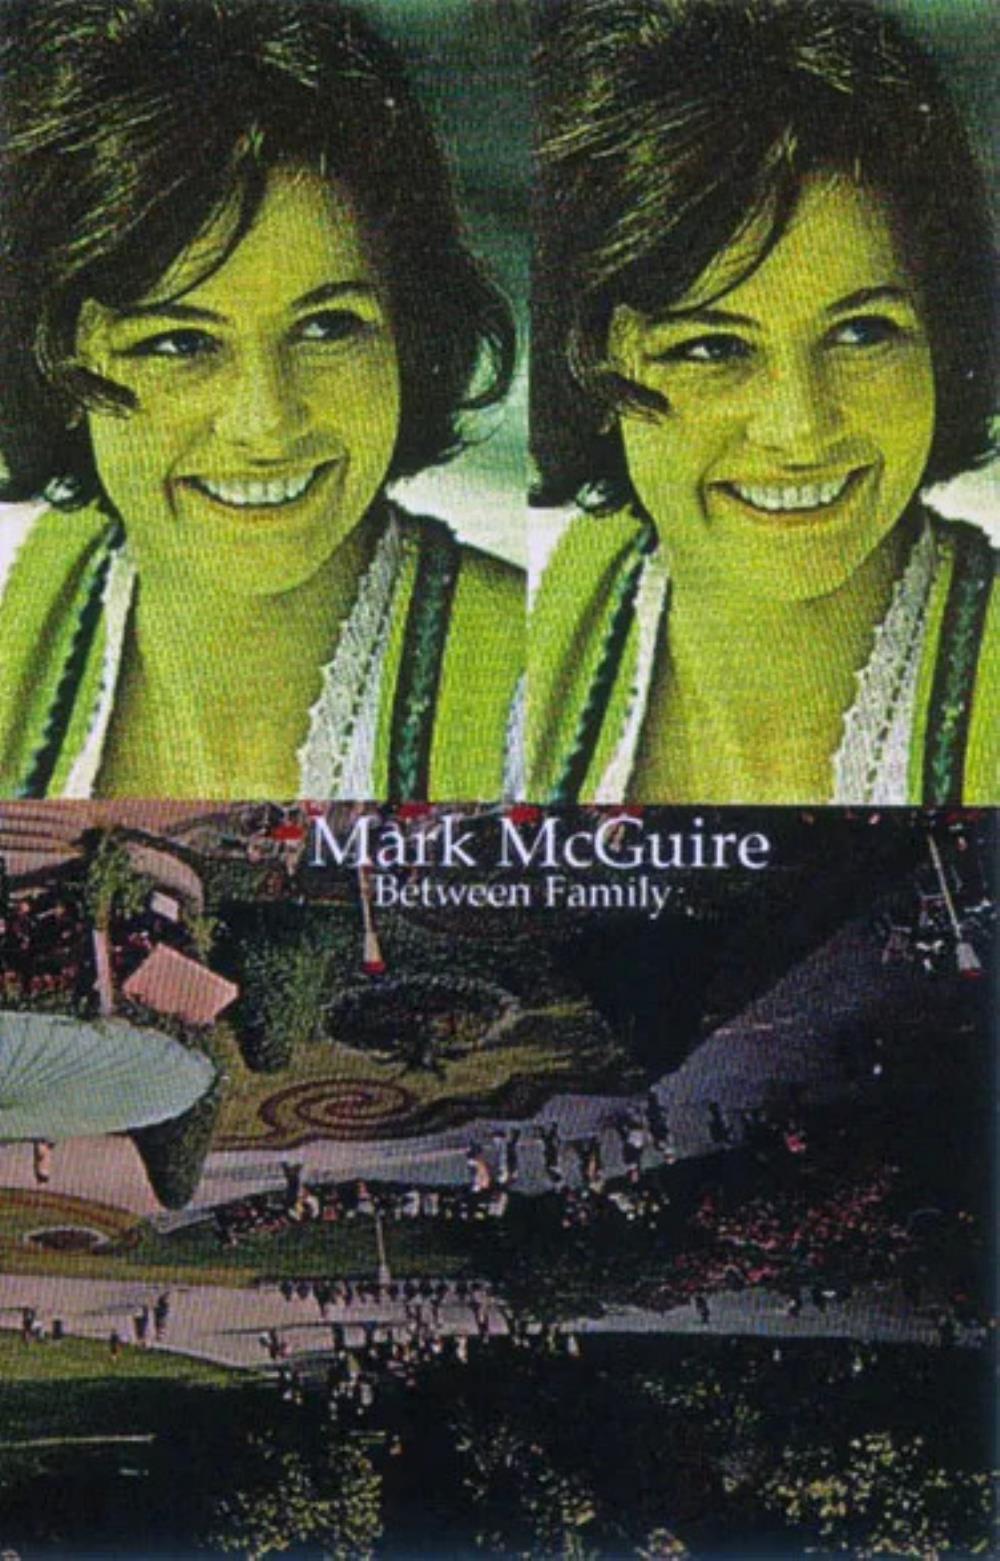 Mark McGuire Between Family album cover